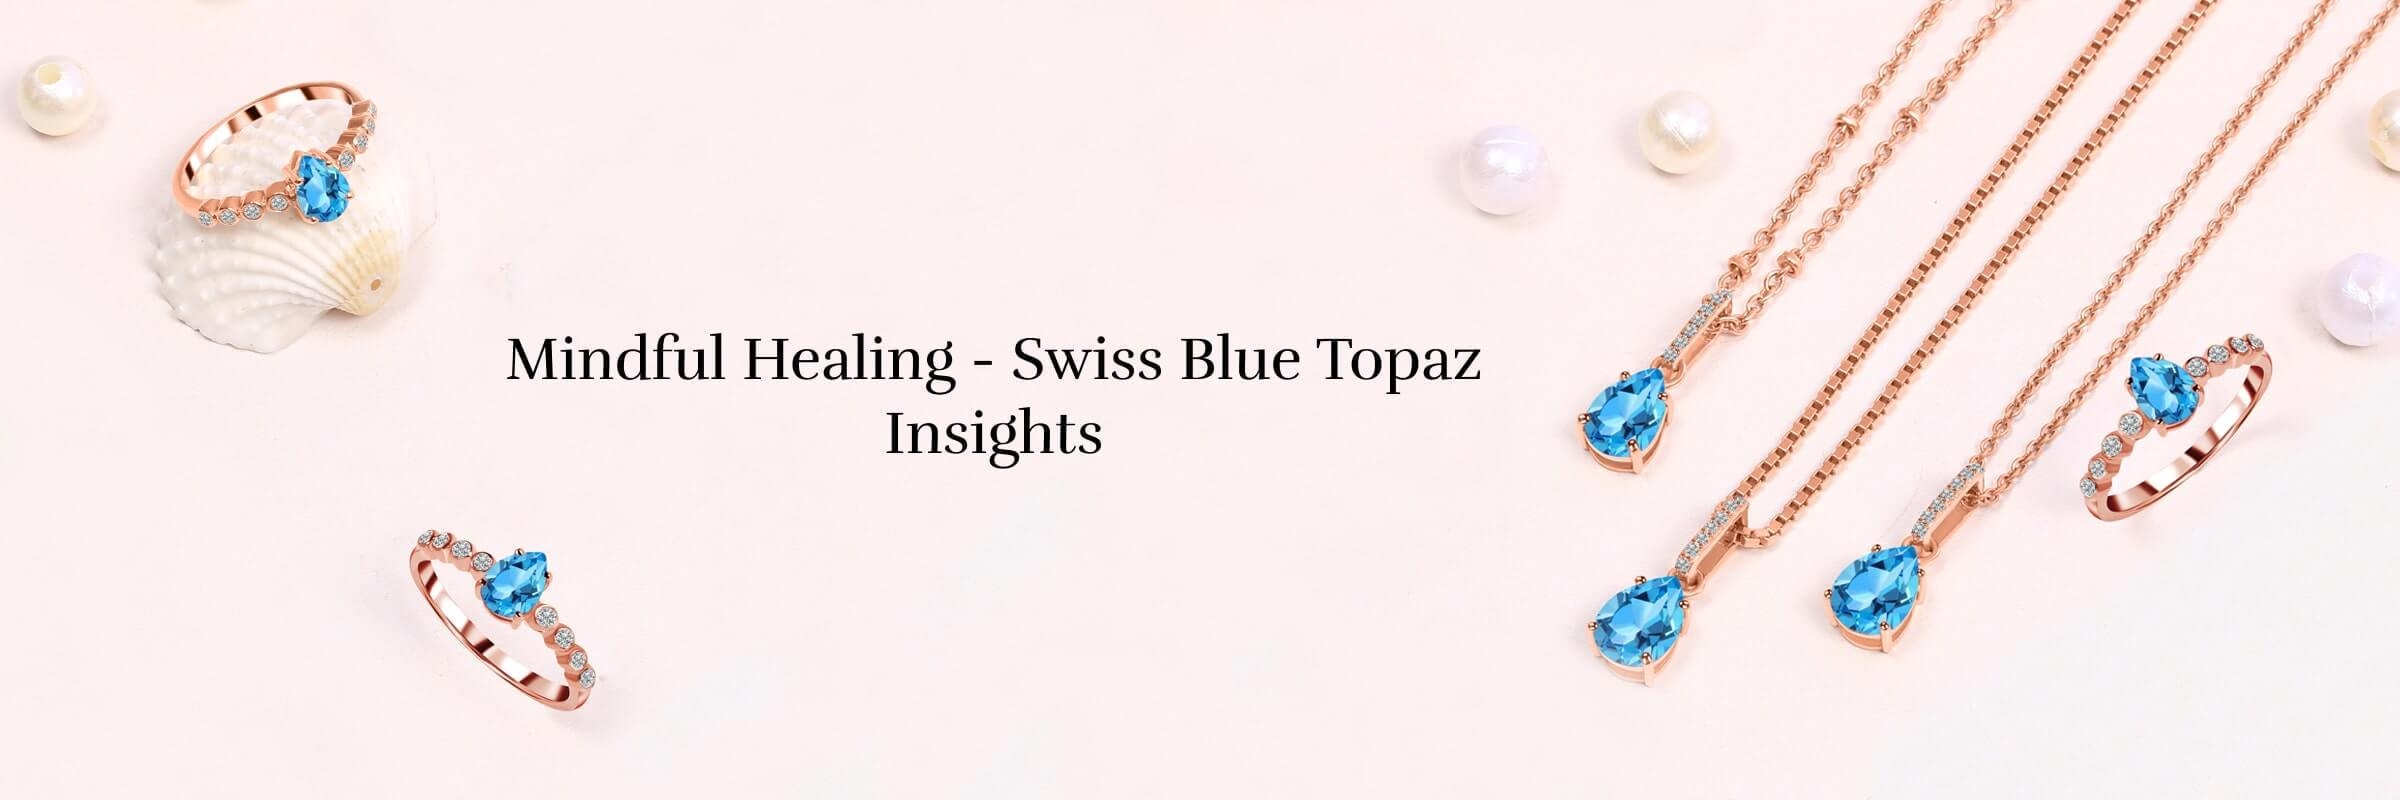 Swiss Blue Topaz Mental & Emotional Healing Properties